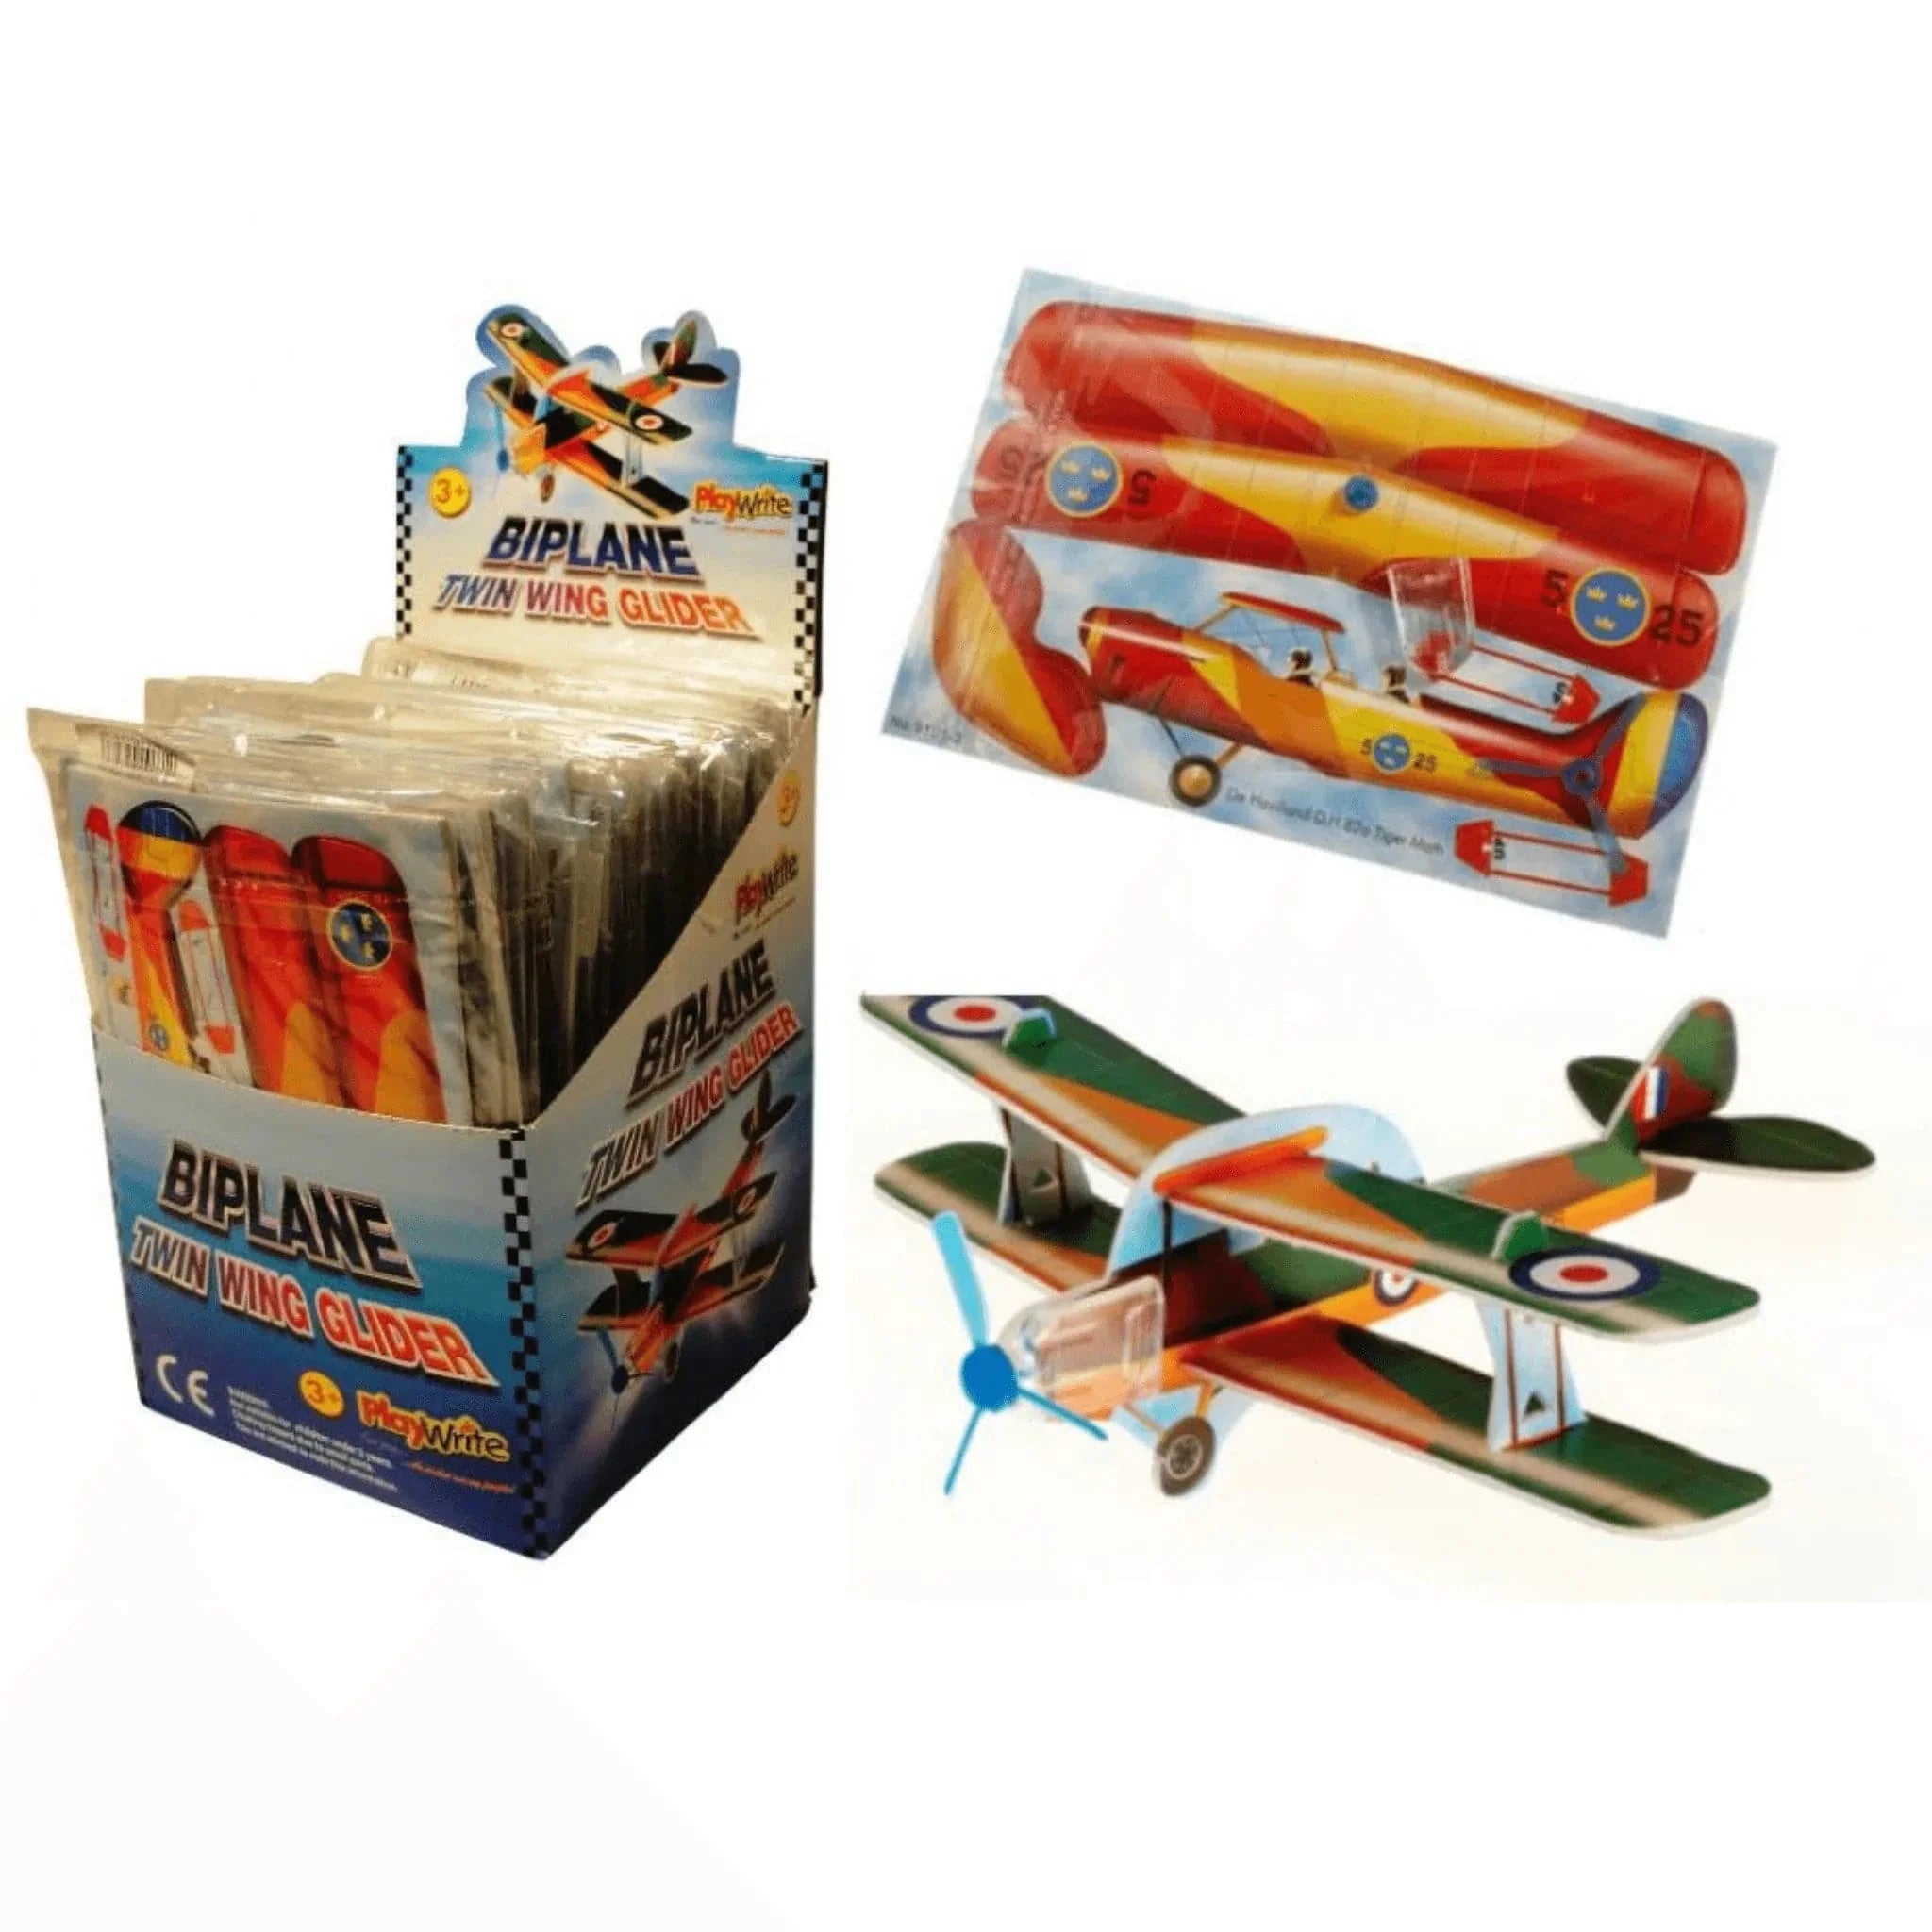 Biplane Twin Wing Glider 17x11cm - Kids Party Craft